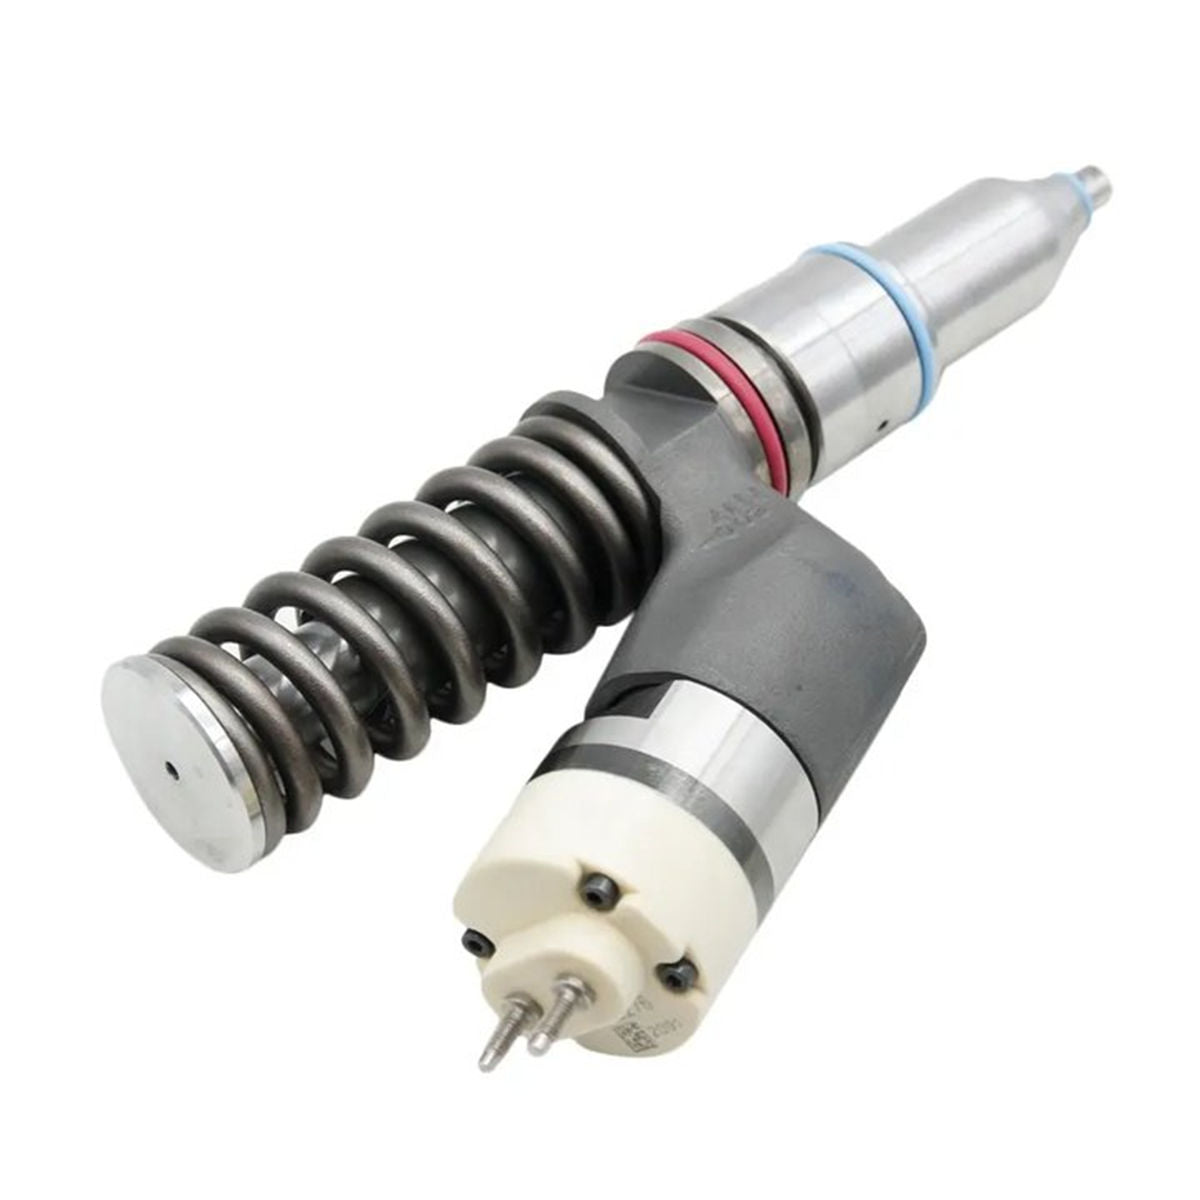 102-6230 0R-4118 Fuel Injector for Caterpillar 3406E Diesel Engine - Sinocmp